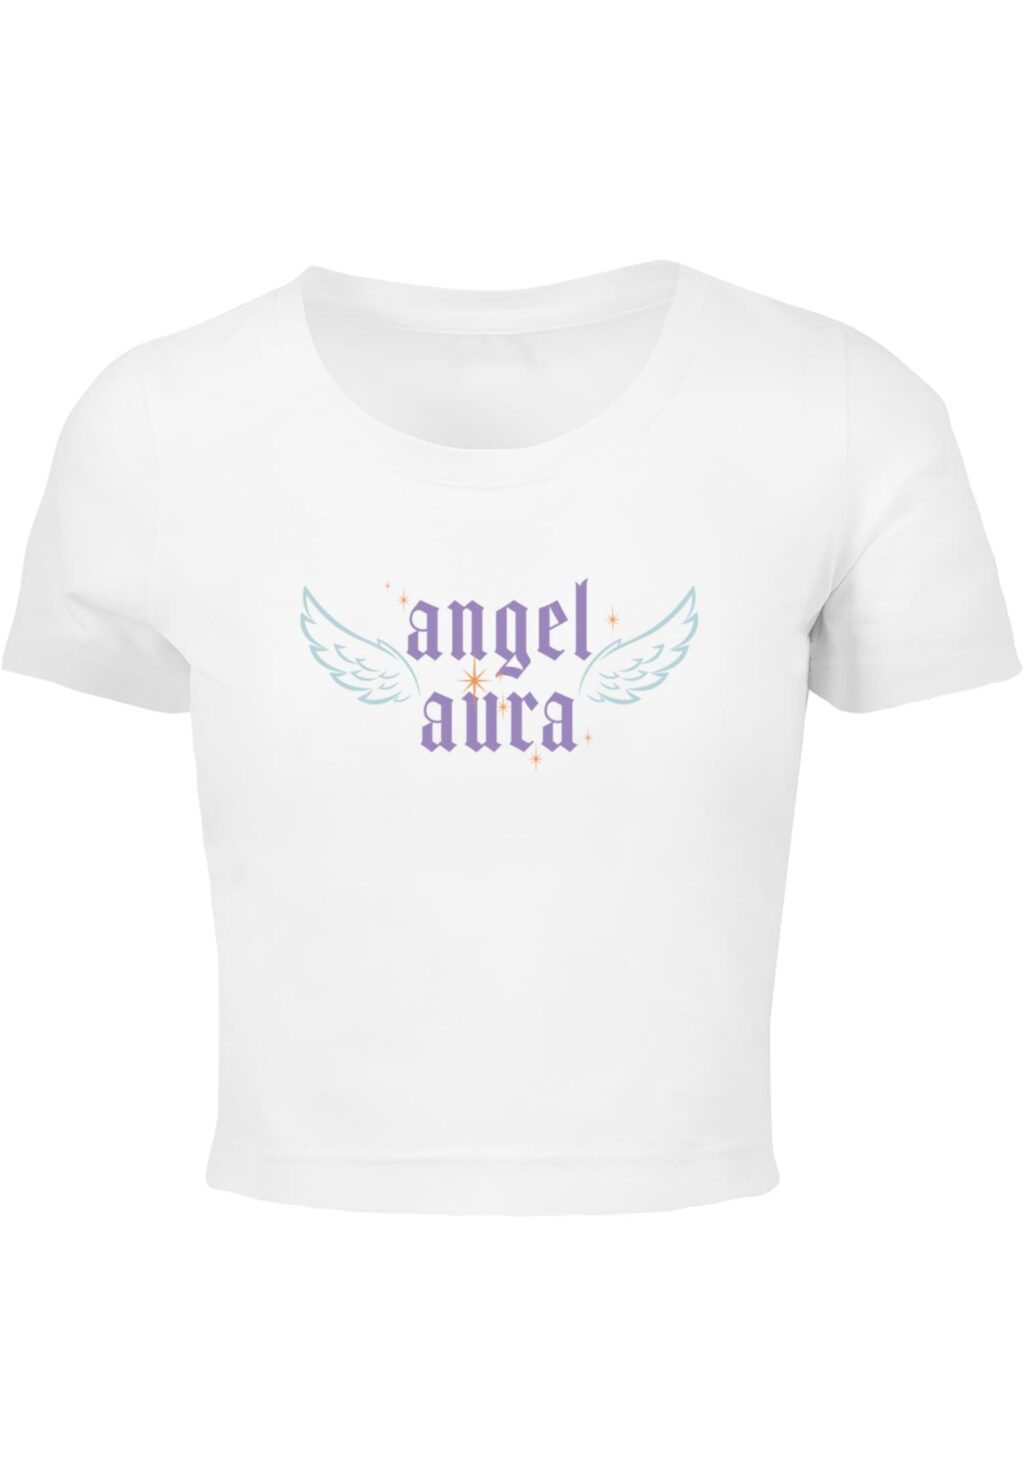 Angel Aura Tee white MST101